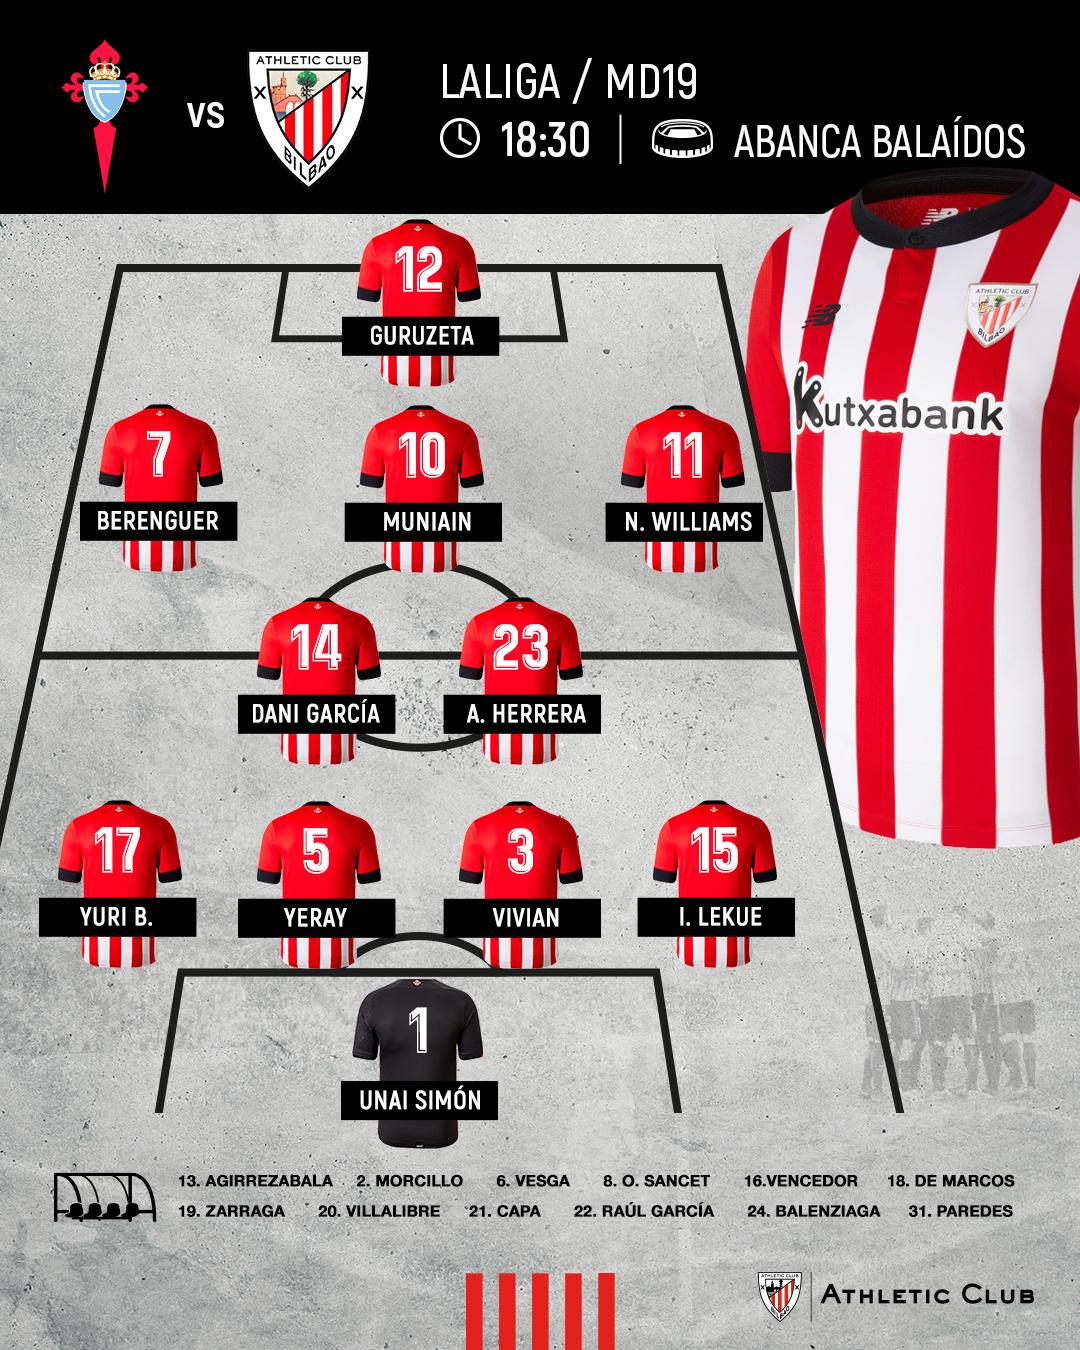 Line-up: RC Celta vs Athletic Club (LaLiga MD19)